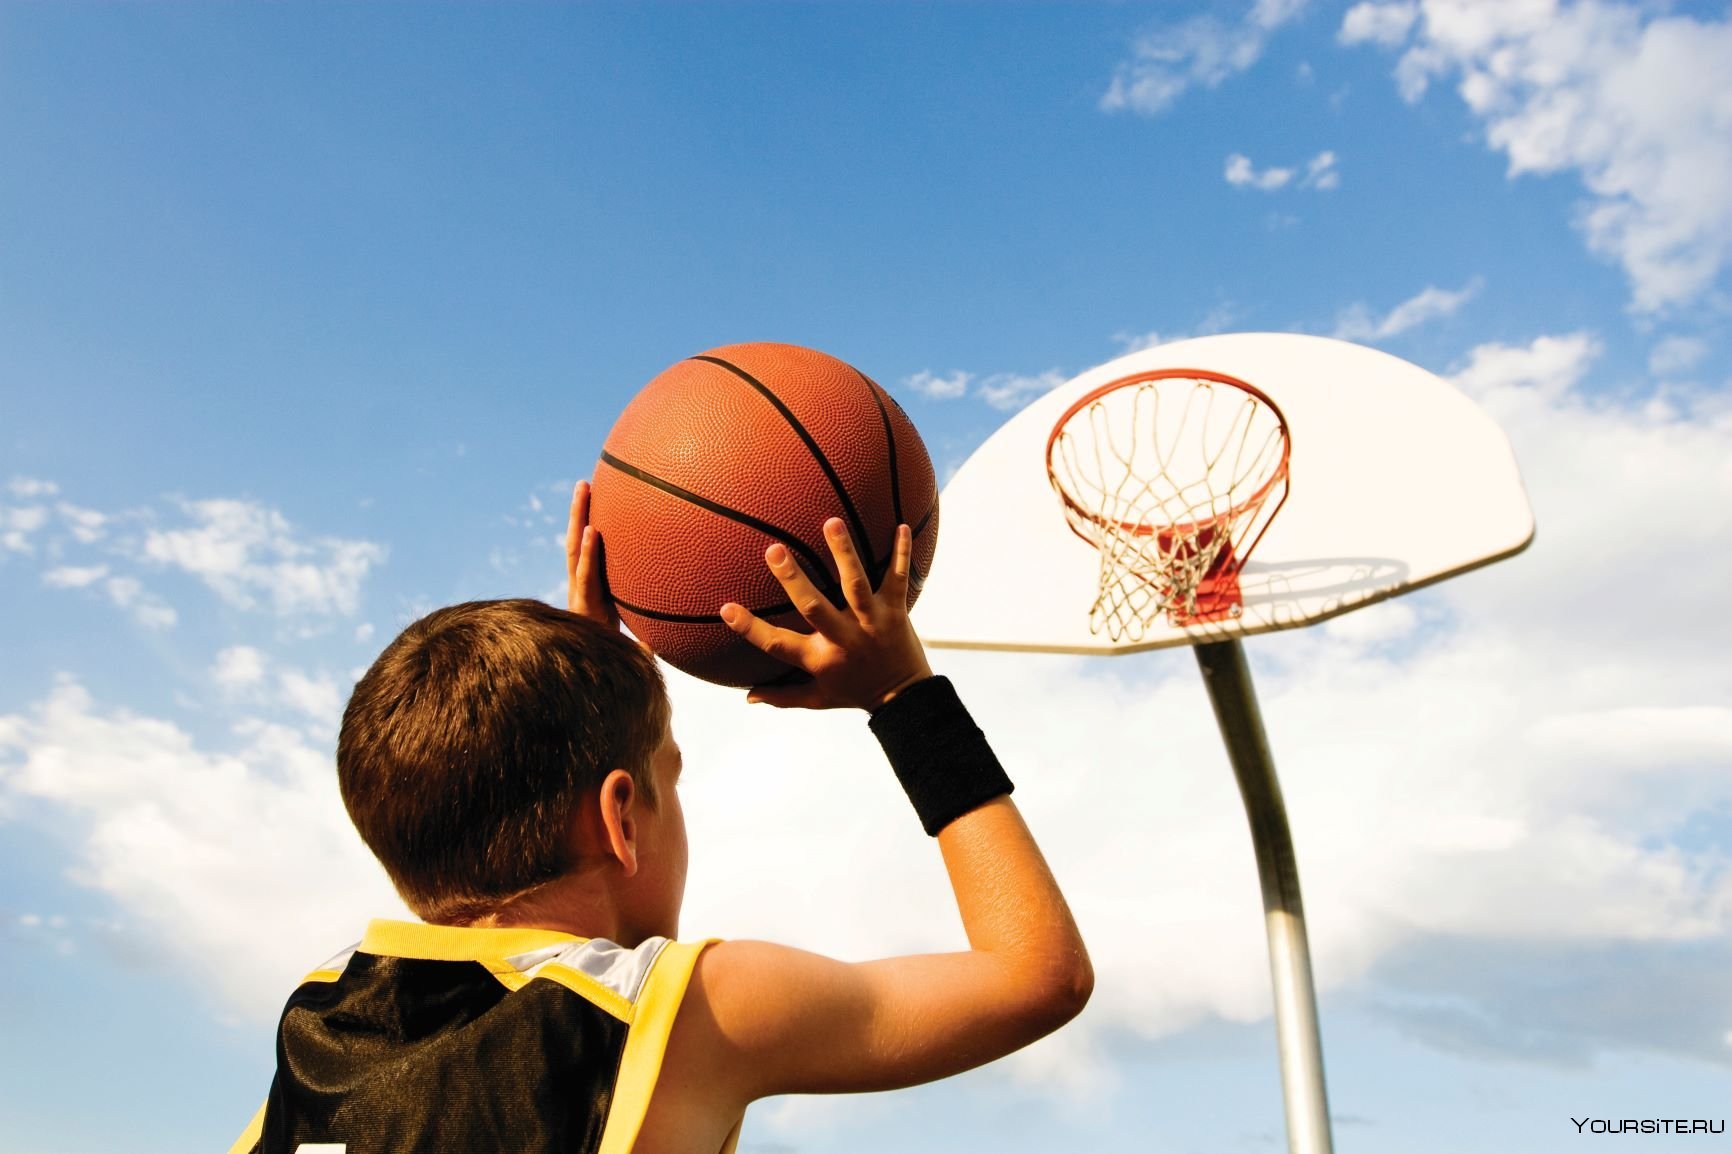 Sport can play with. Баскетбол дети. Бросать мяч. Спорт дети. Спорт баскетбол дети.